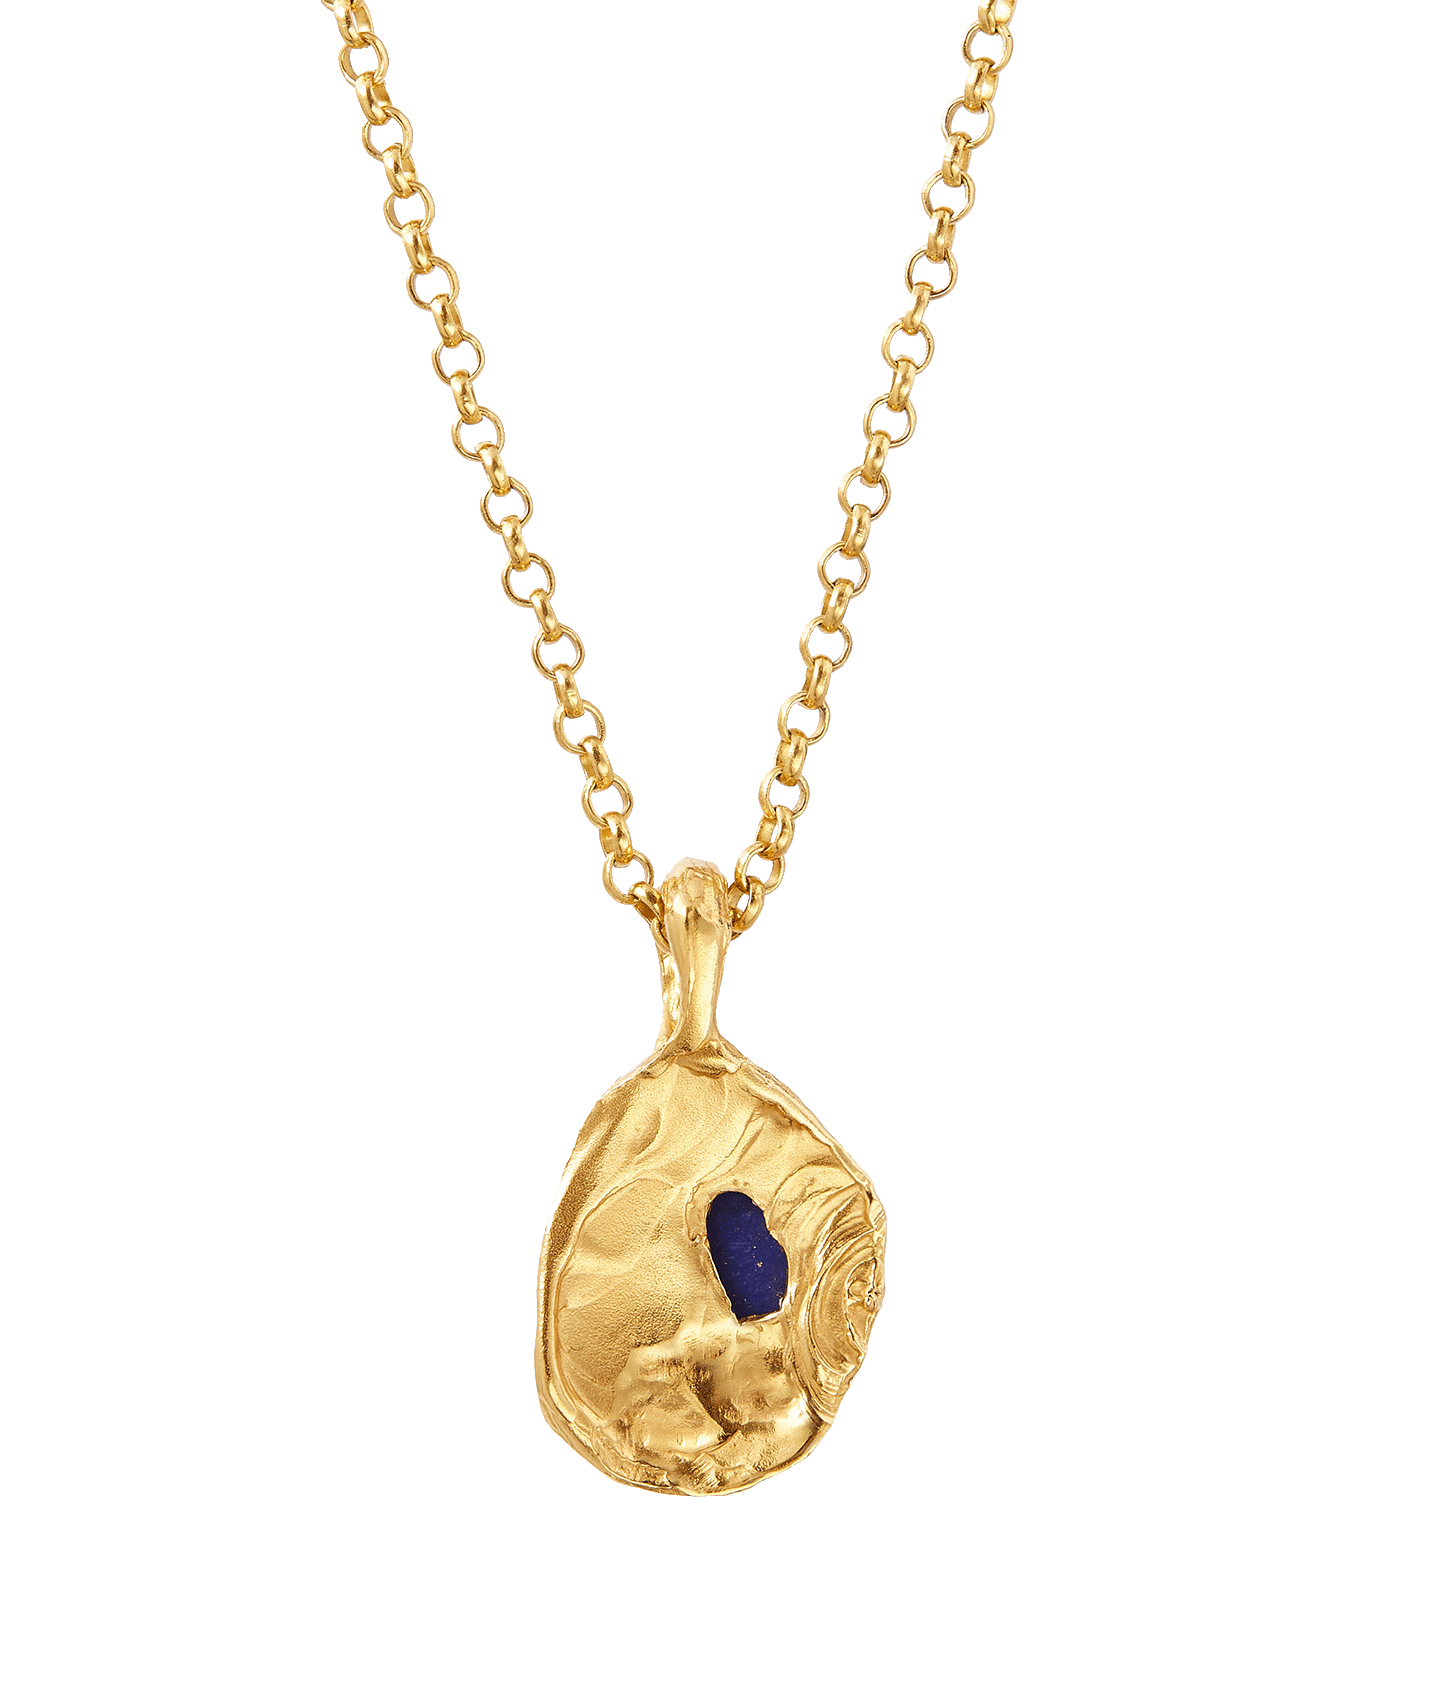 The Droplet of the Horizon Lapis Lazuli Necklace